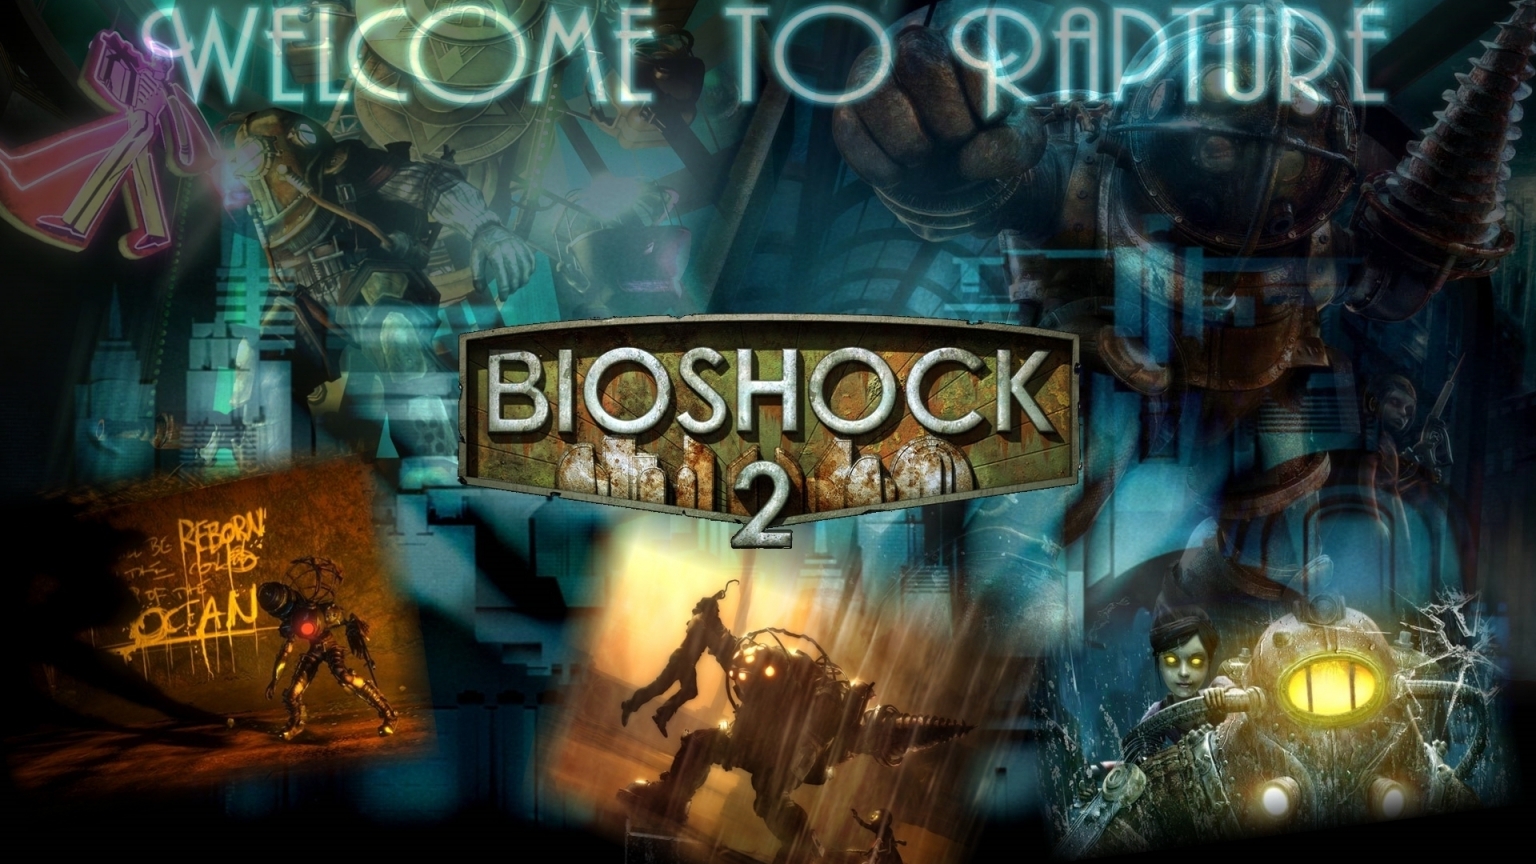 Bioshock 2 for 1536 x 864 HDTV resolution